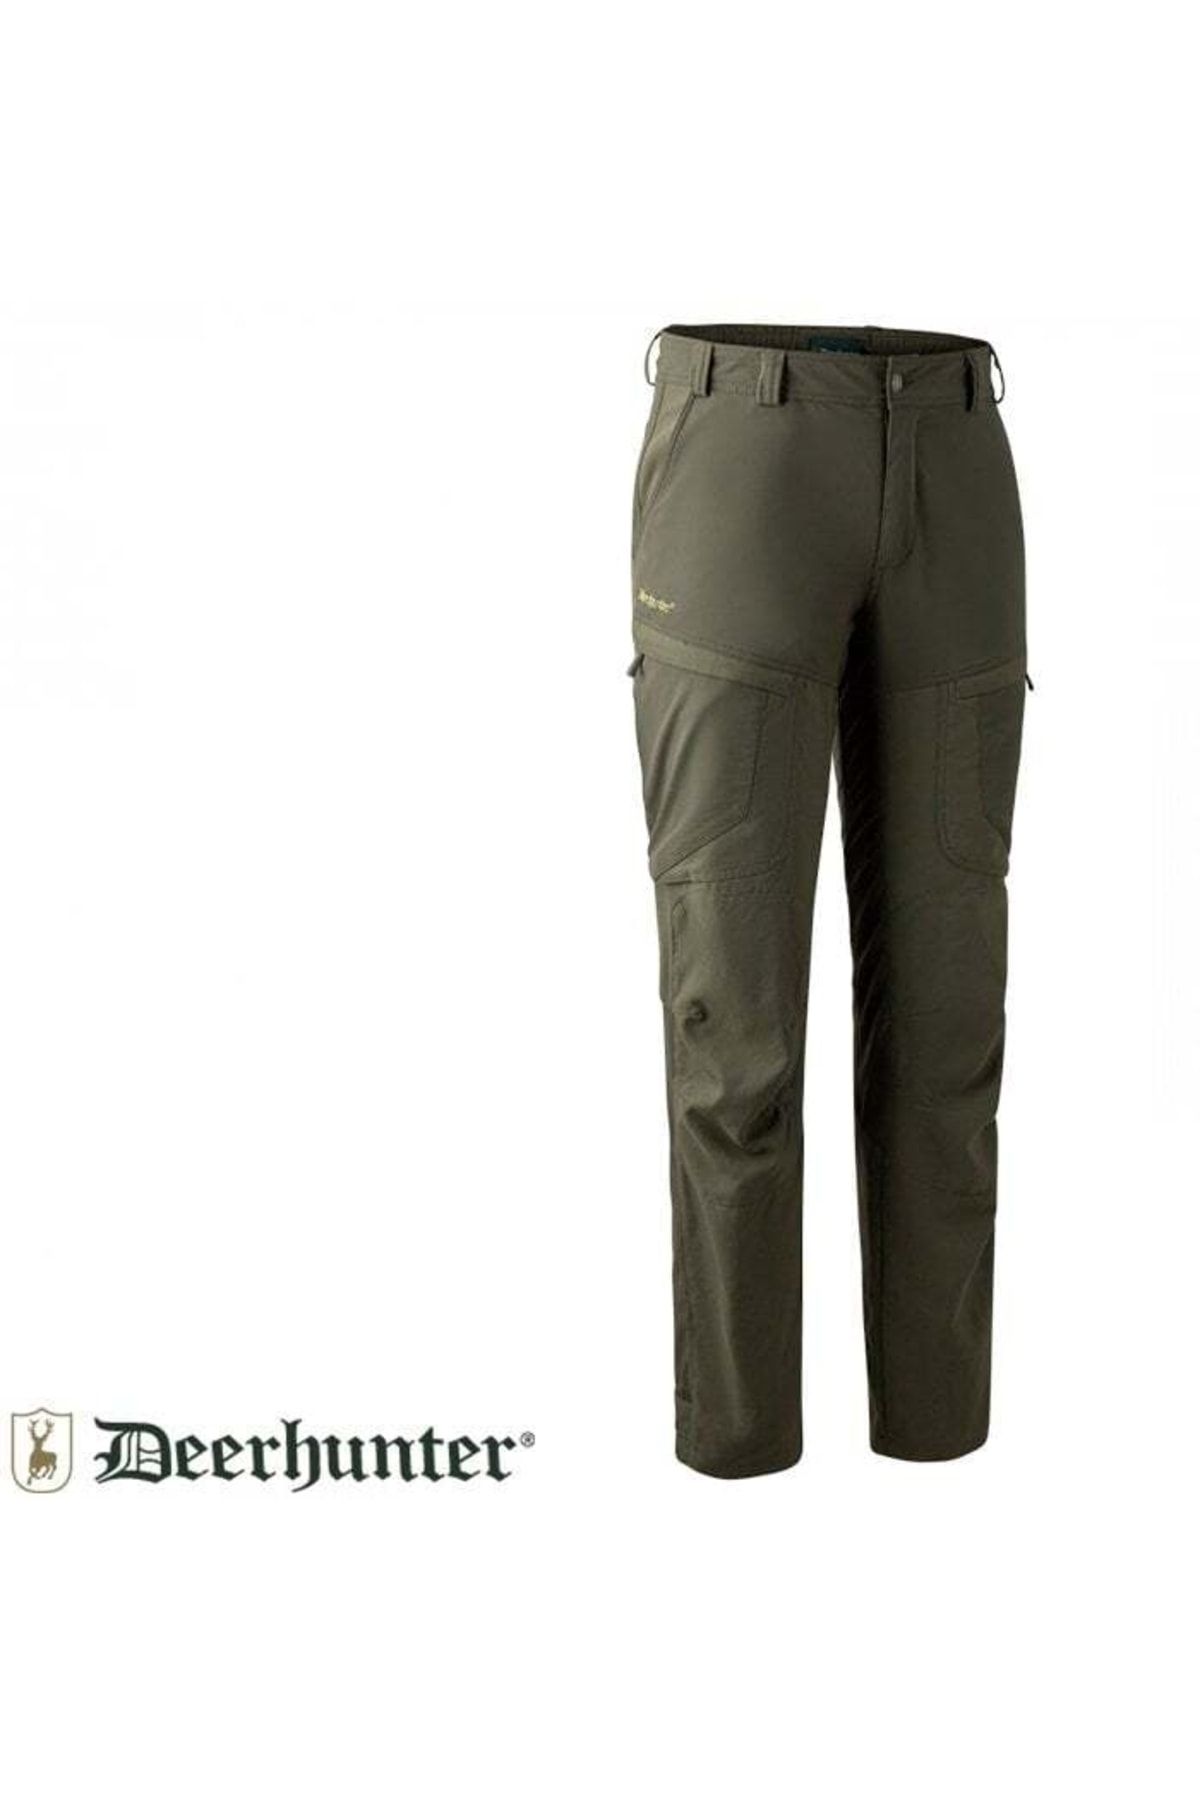 Deerhunter 389 Strike Extreme Yeşil Pantolon 50